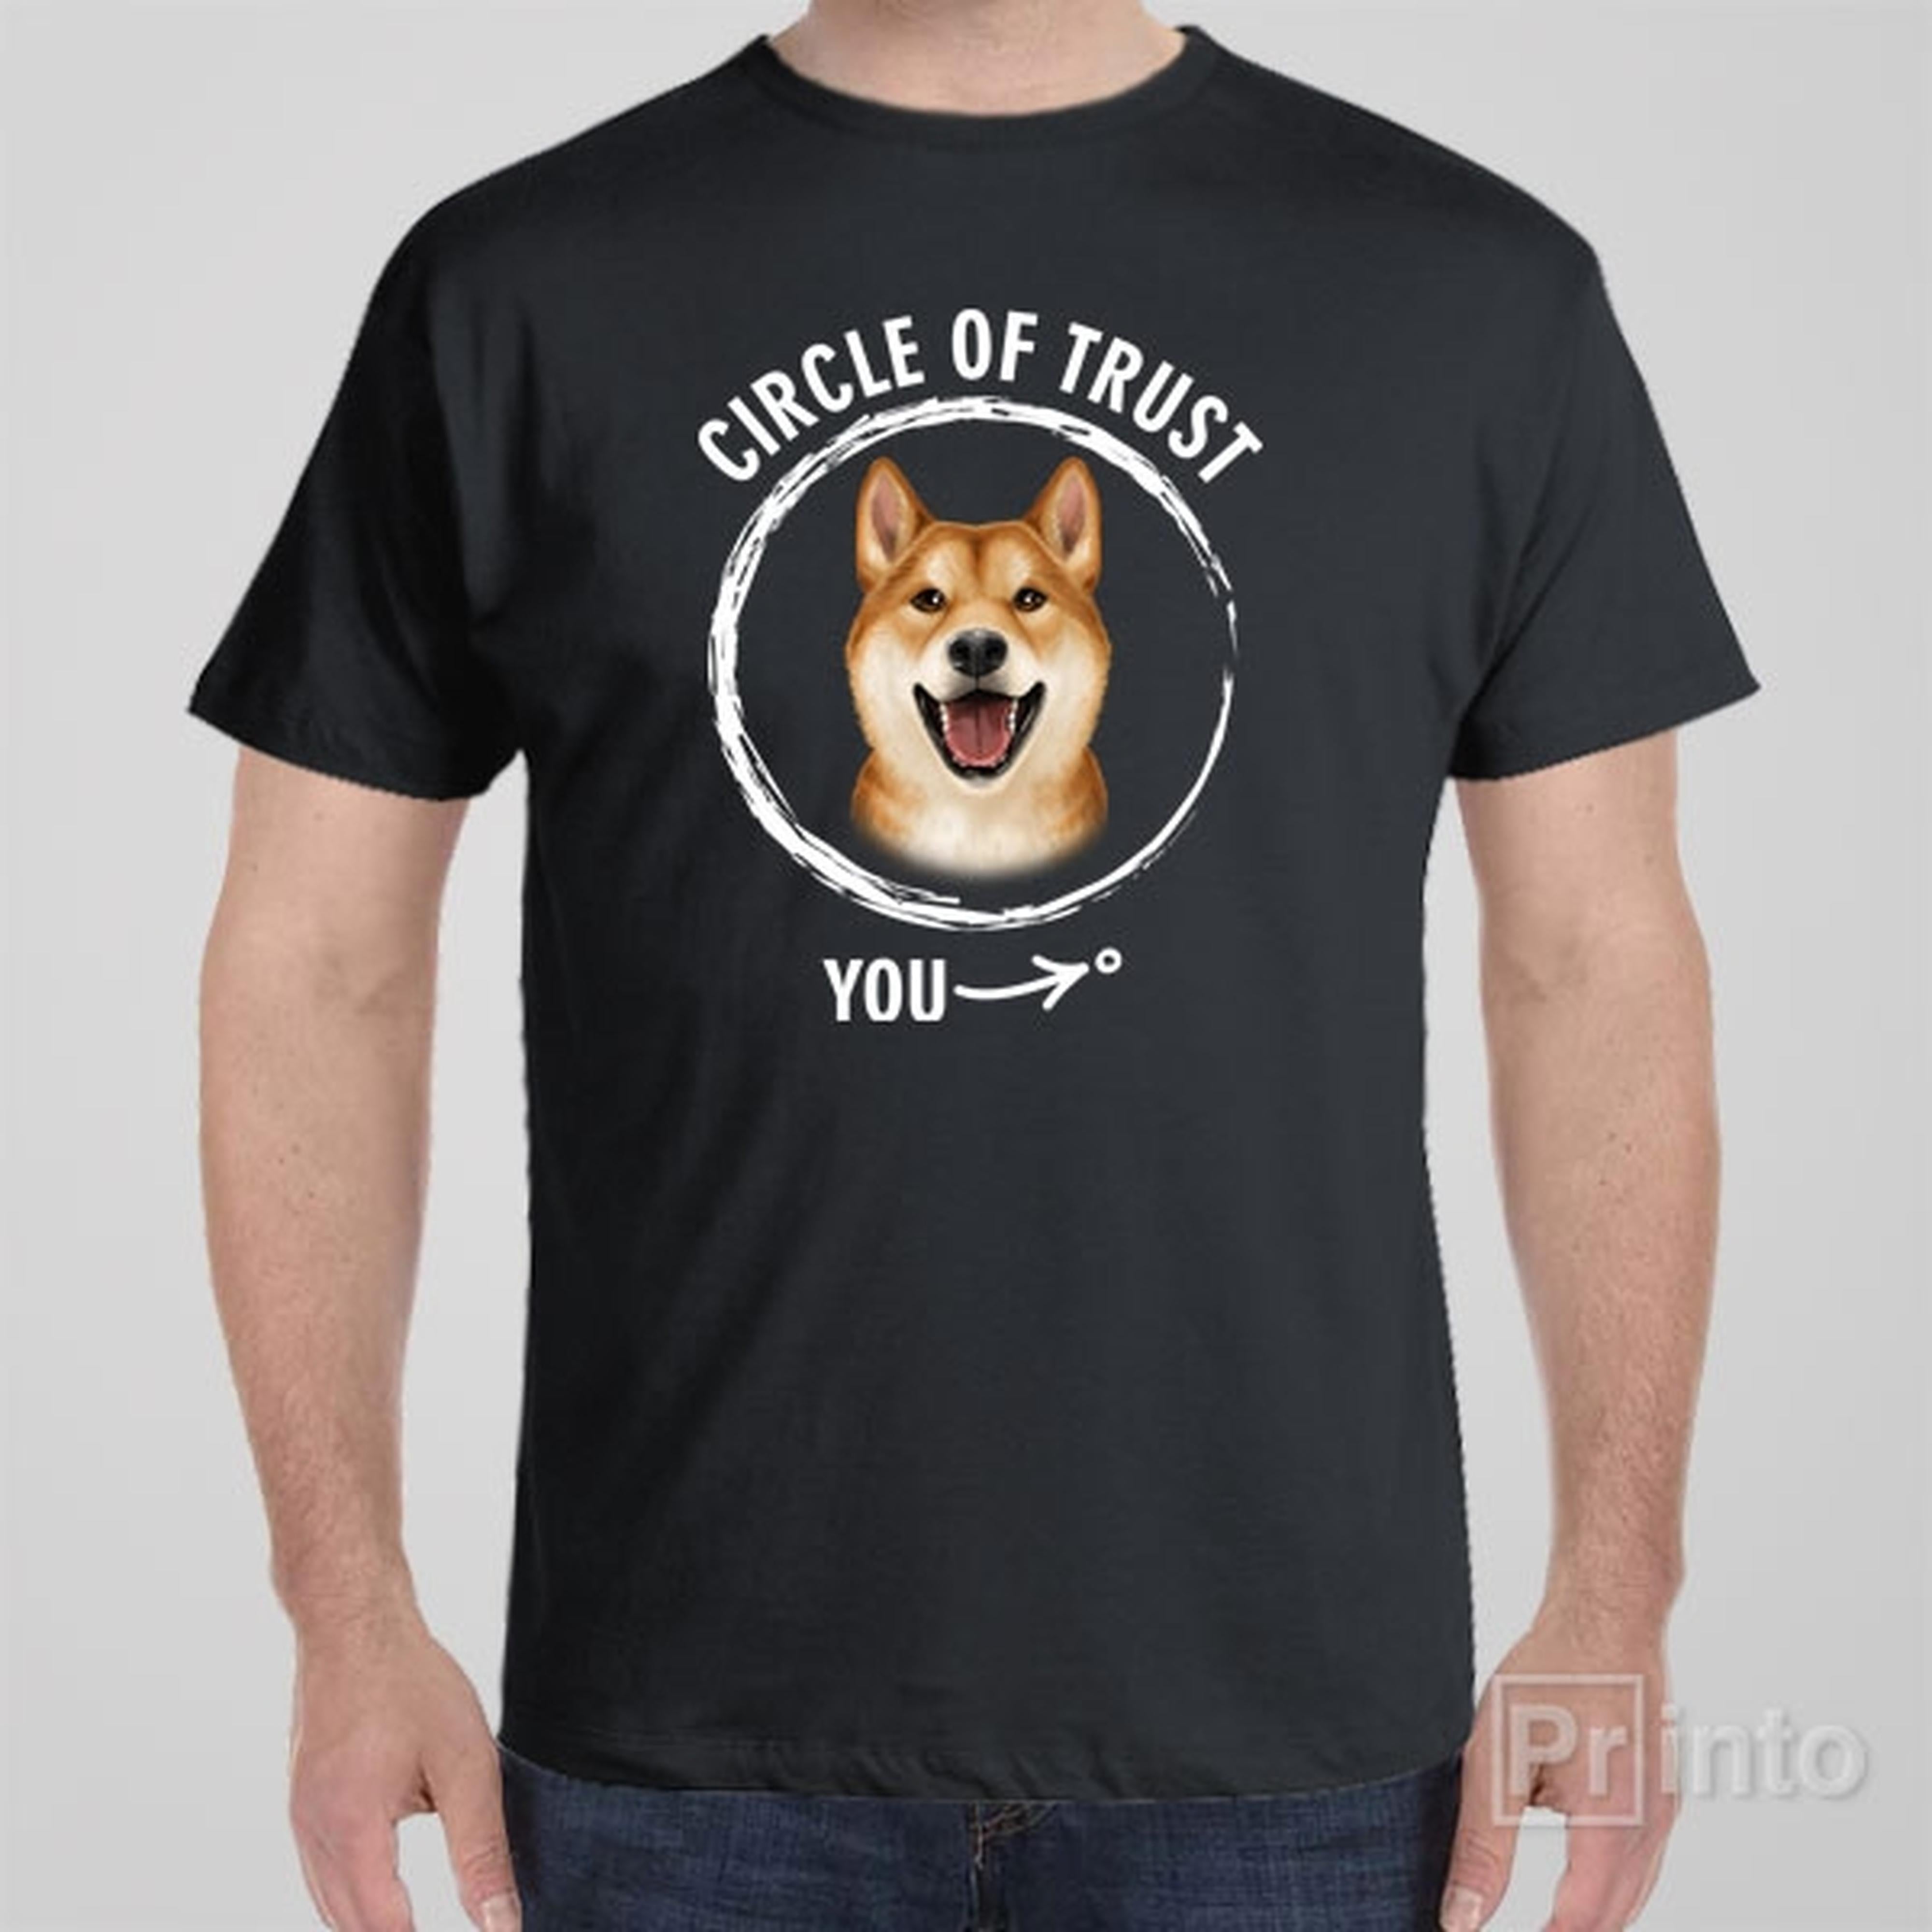 circle-of-trust-shiba-inu-t-shirt